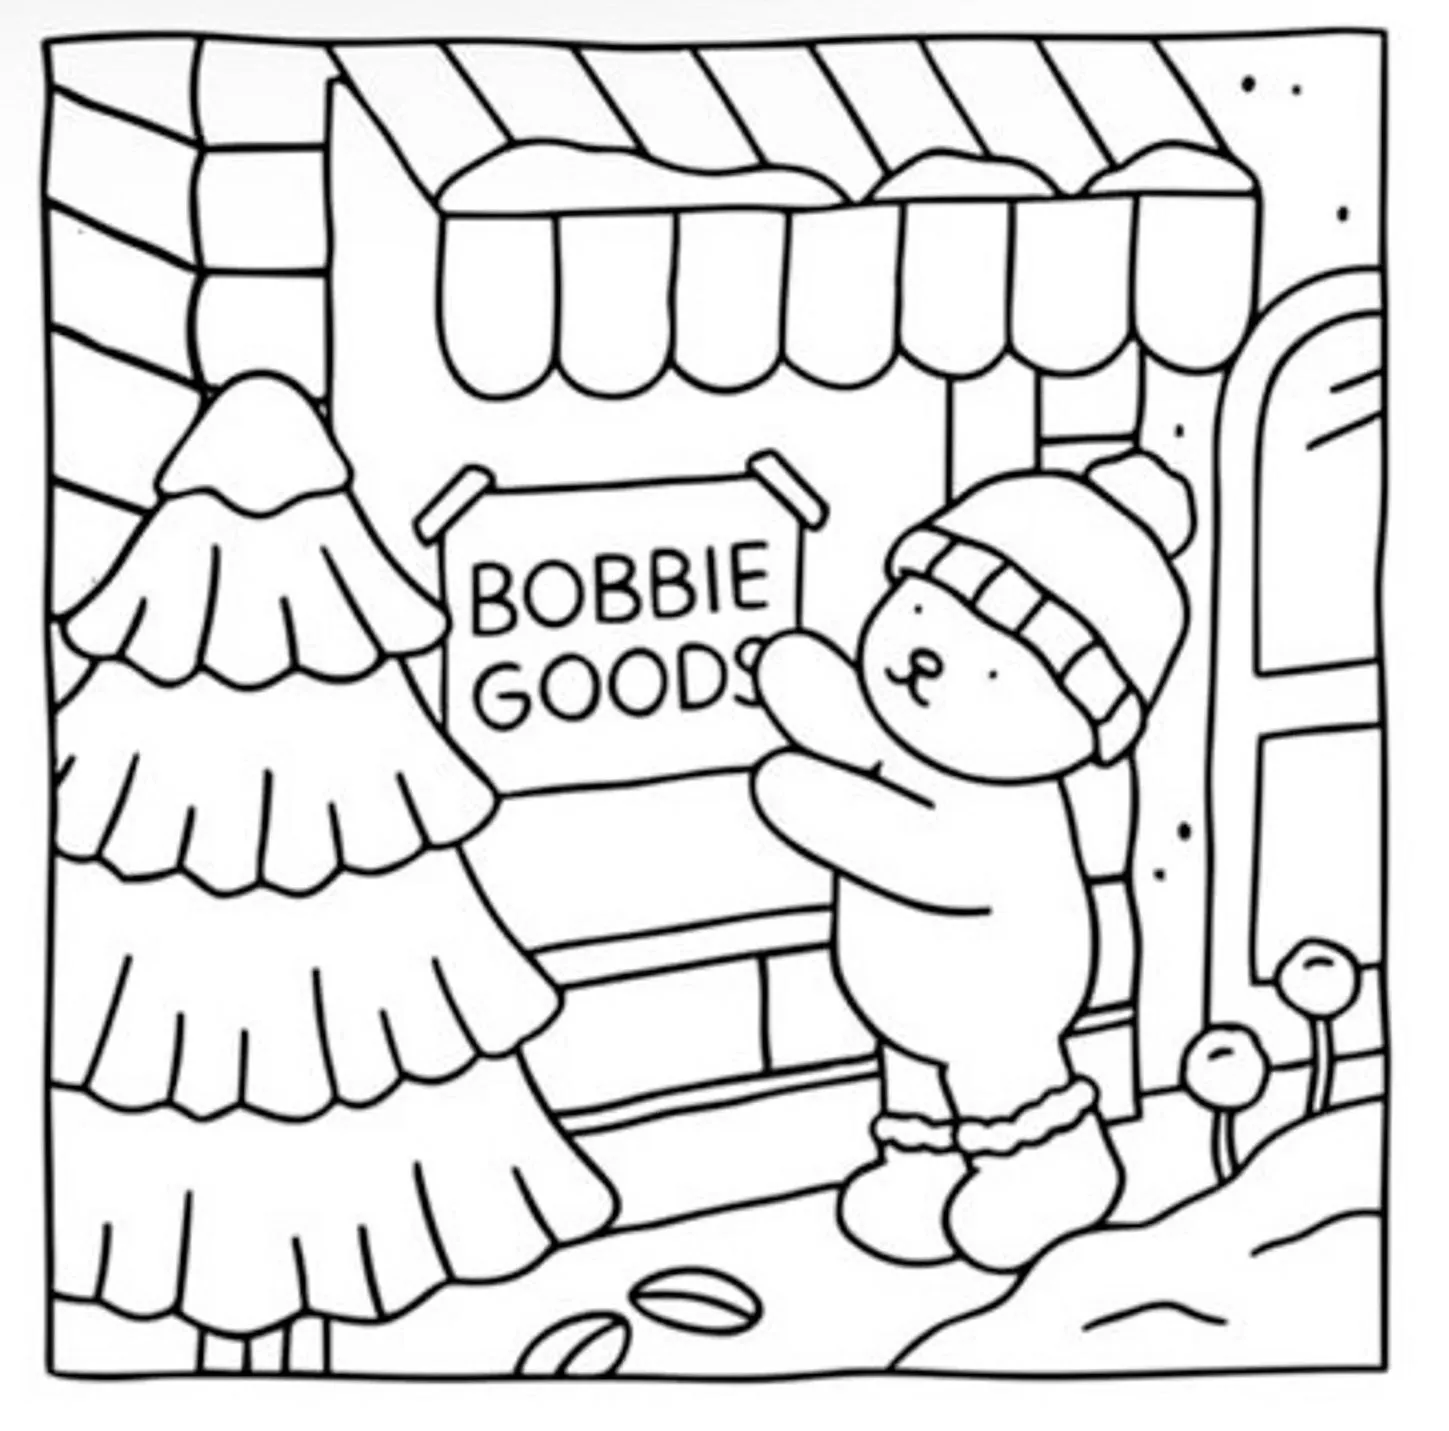 Bobbie Goods Coloring Pages 61